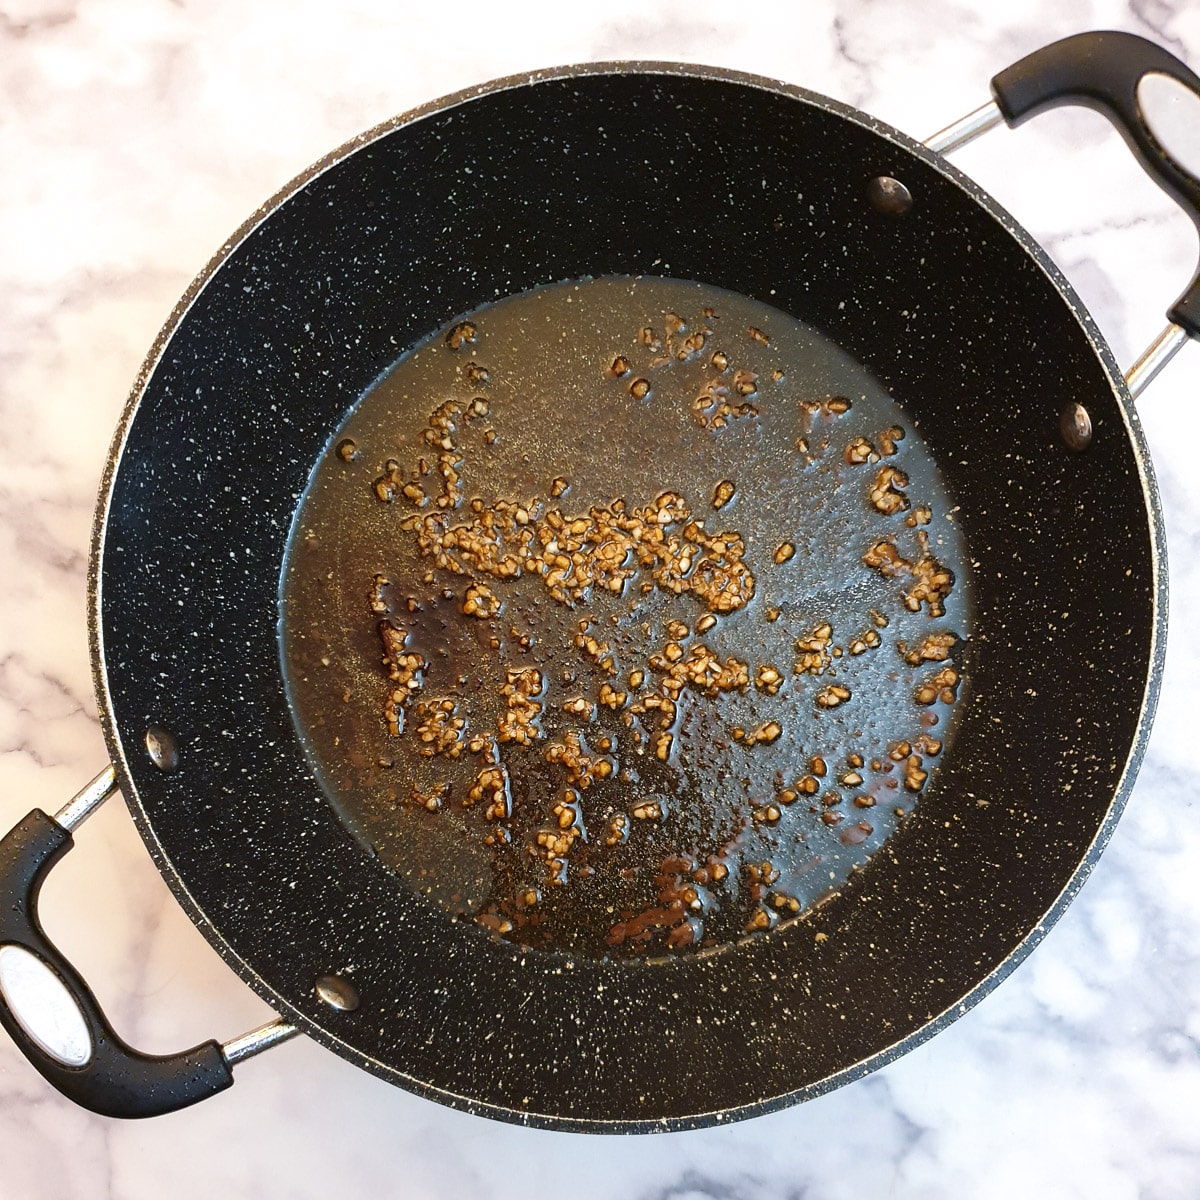 Minced garlic in a frying pan.